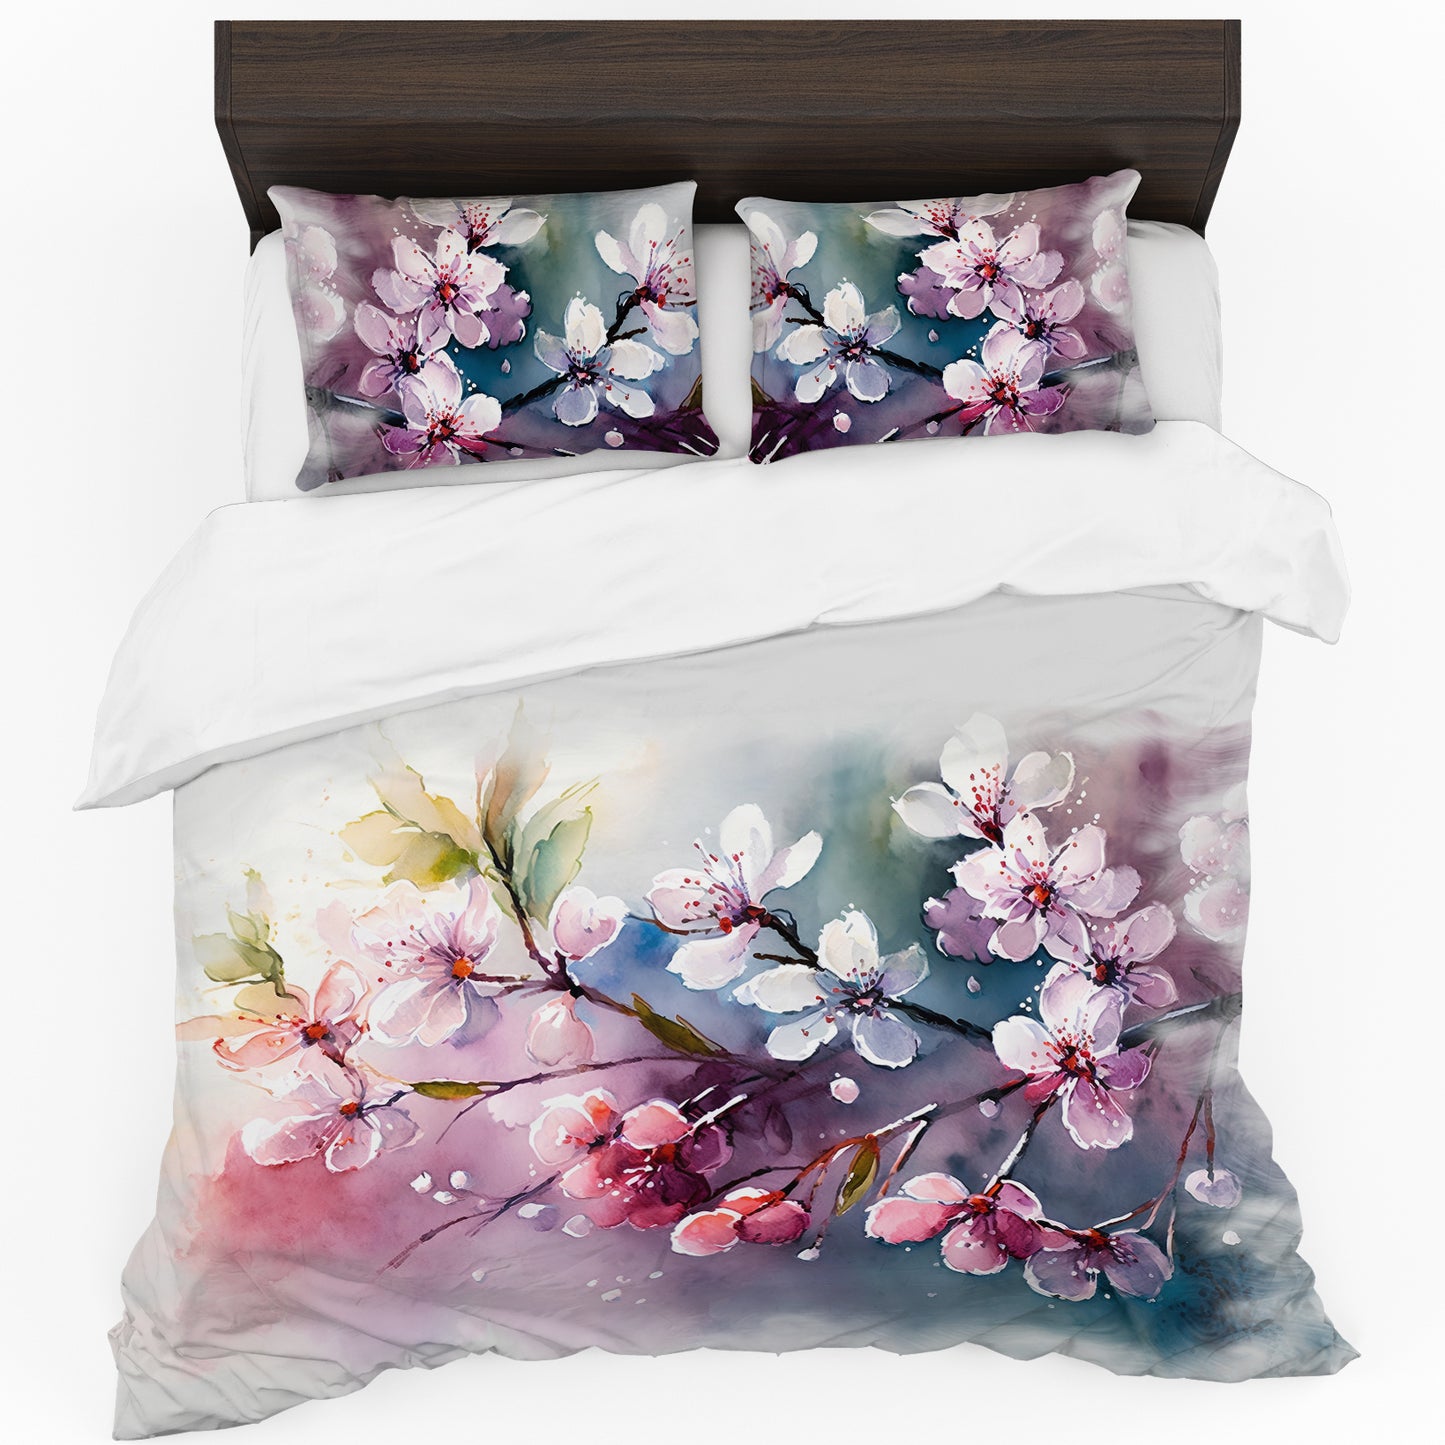 Delicate Blossoms Duvet Cover Set